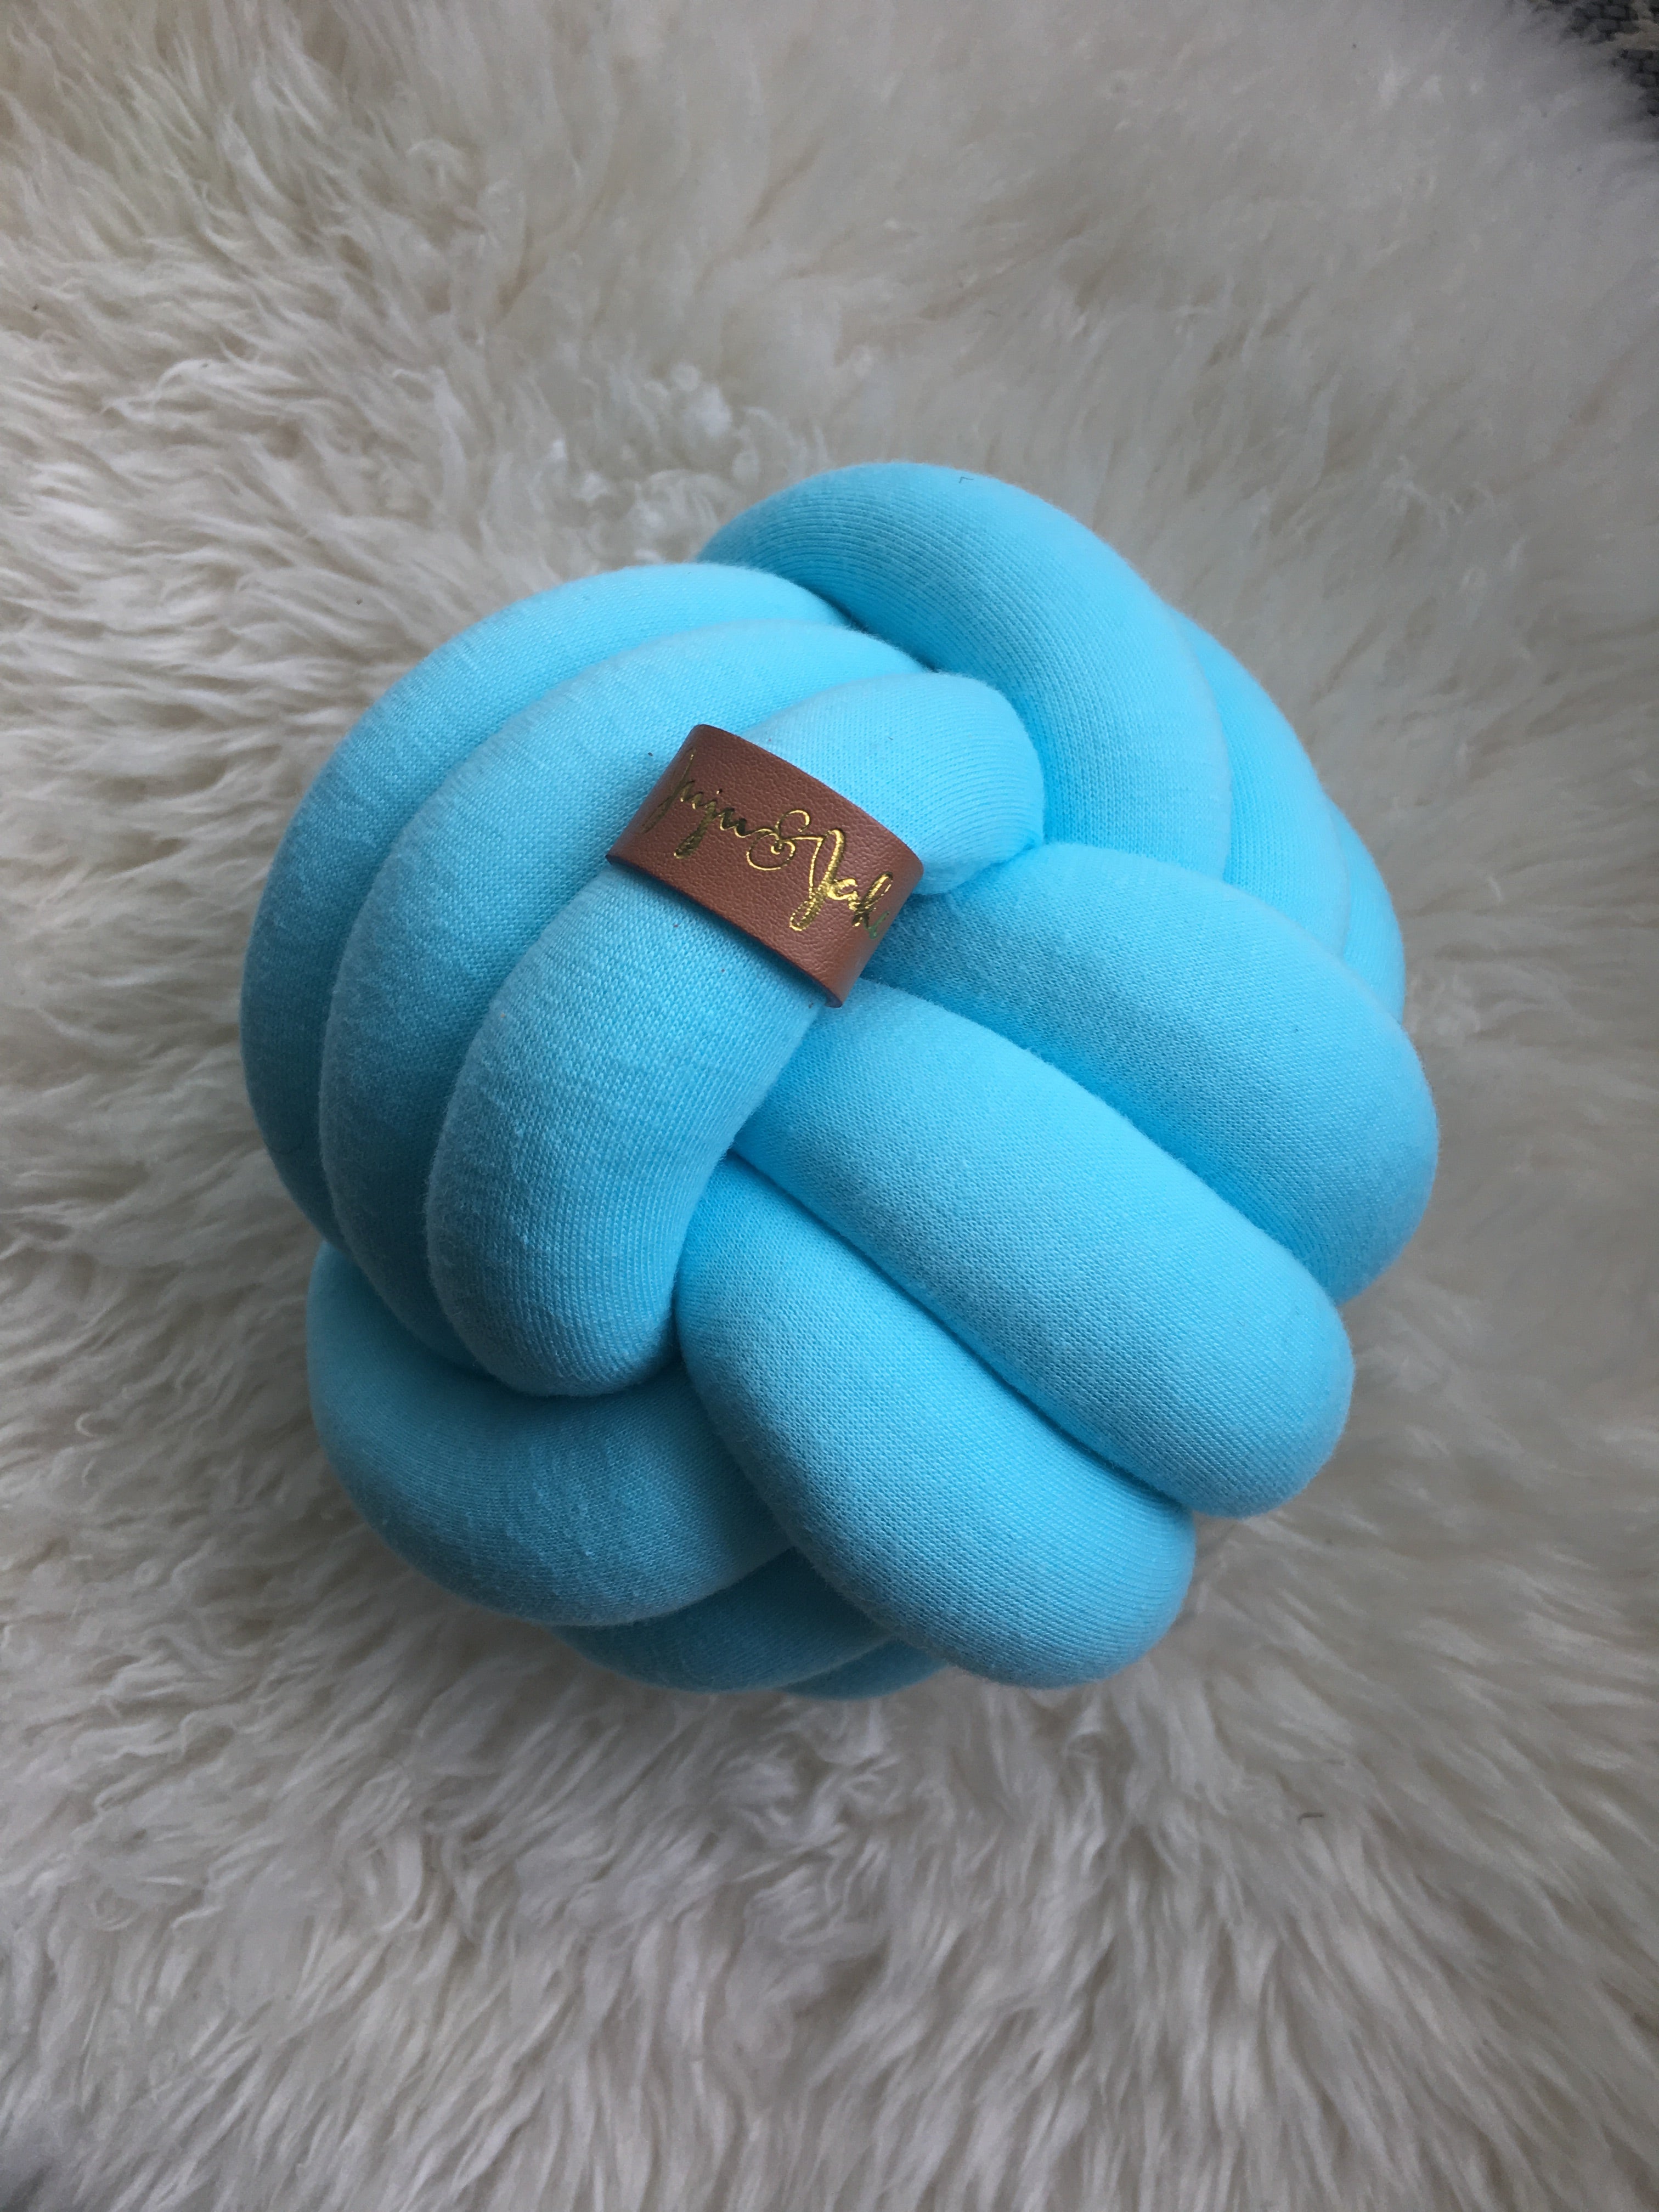 Mini Knot Pillow - See more Knot Pillows & Cushions at JujuAndJake.com